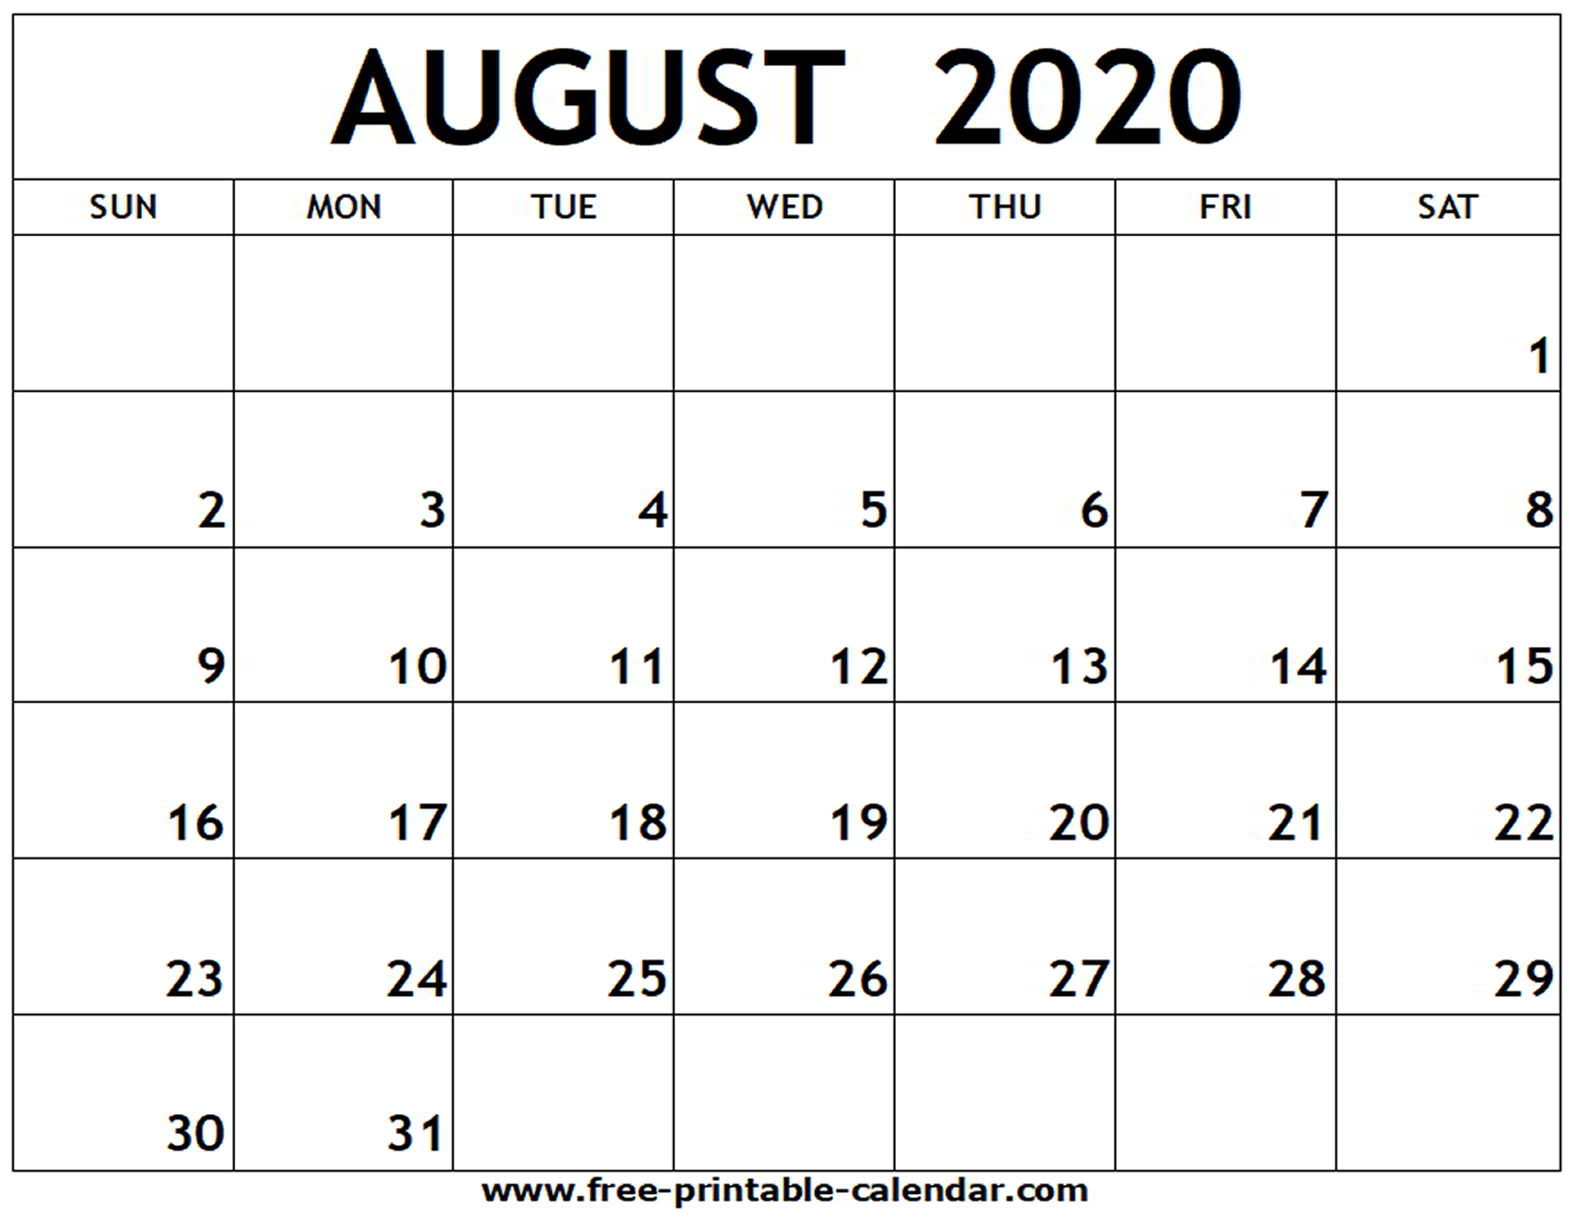 August 2020 Printable Calendar - Free-Printable-Calendar